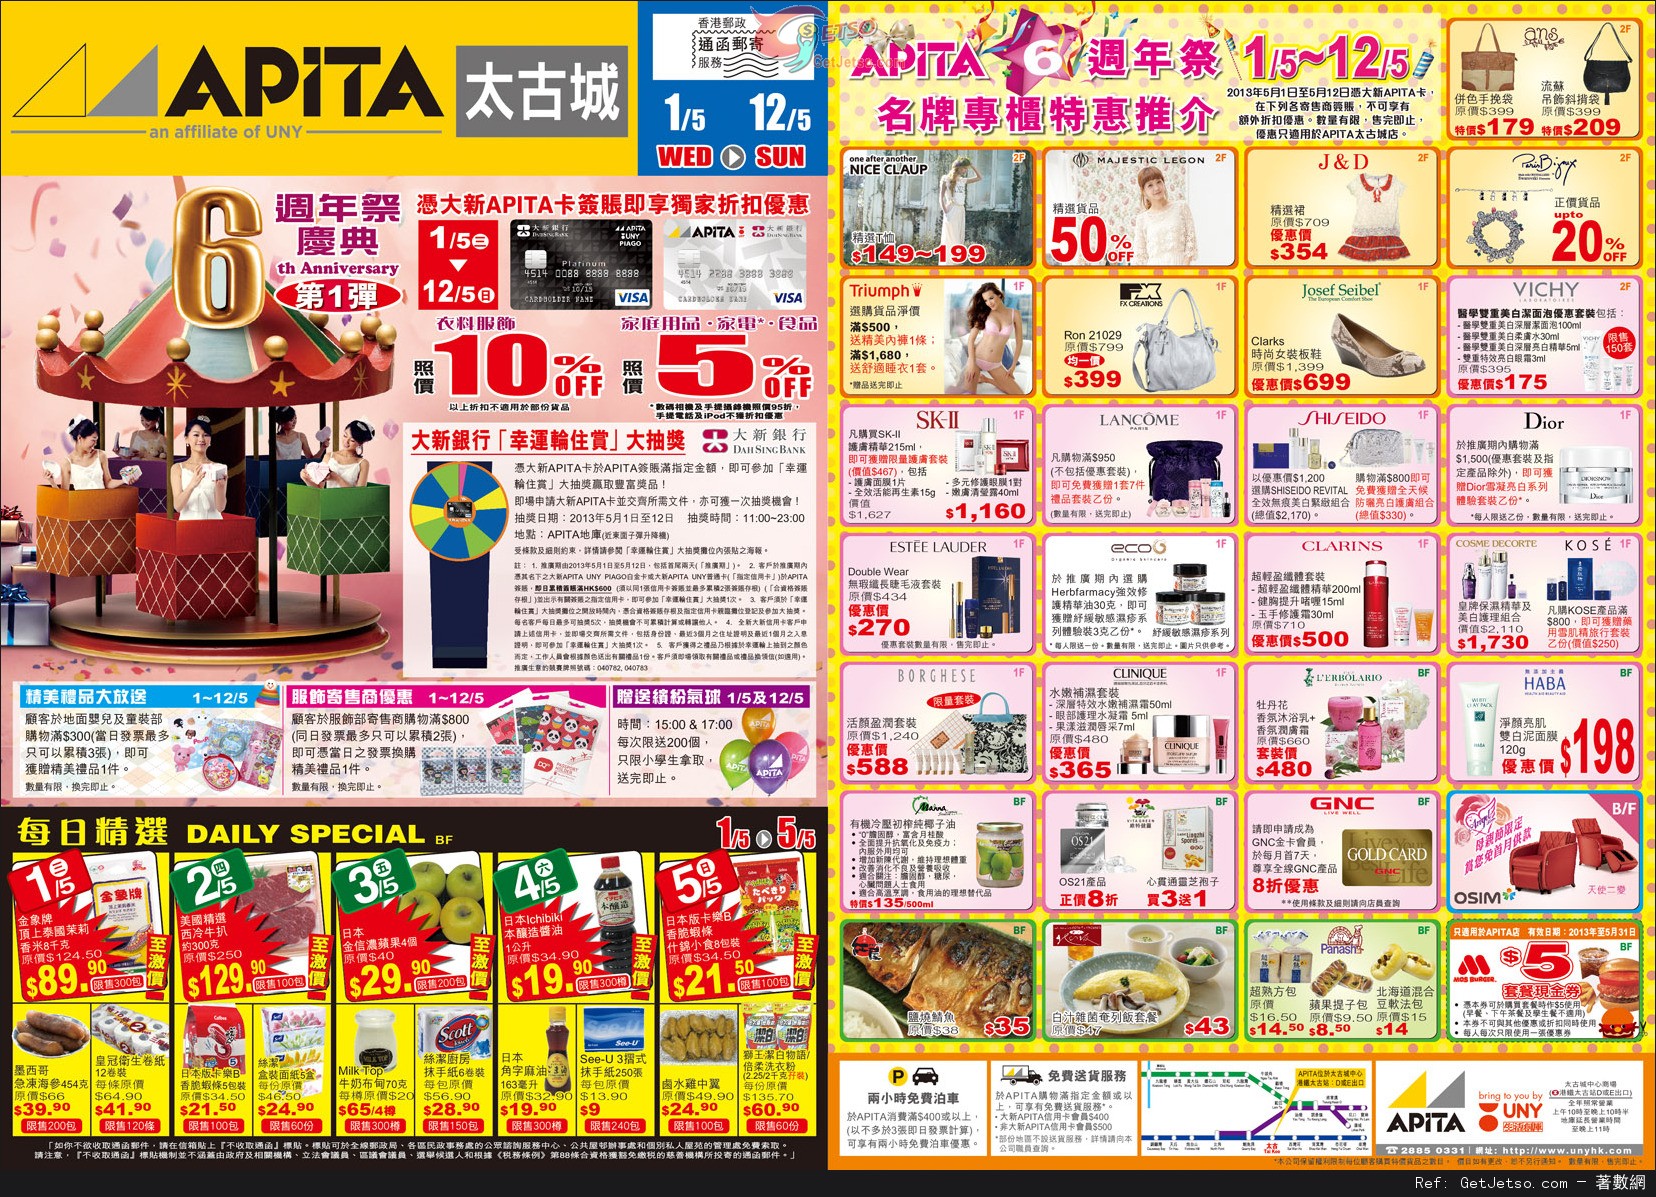 APITA 太古城6週年慶典購物優惠(至13年5月12日)圖片1